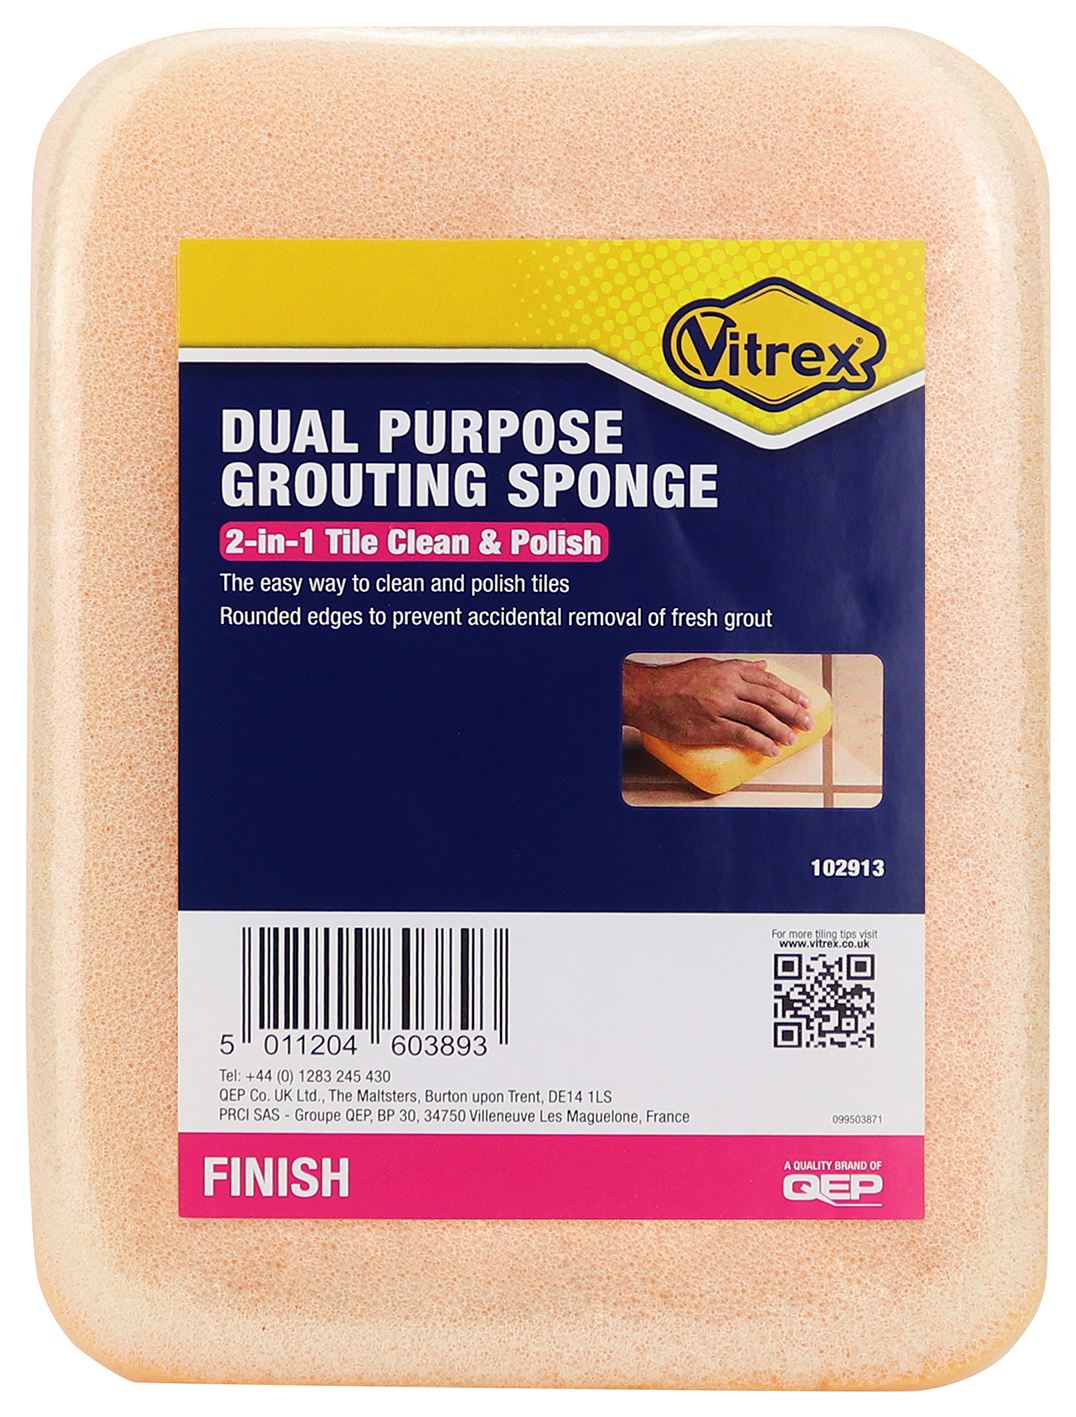 Vitrex Dual Purpose Grouting Sponge